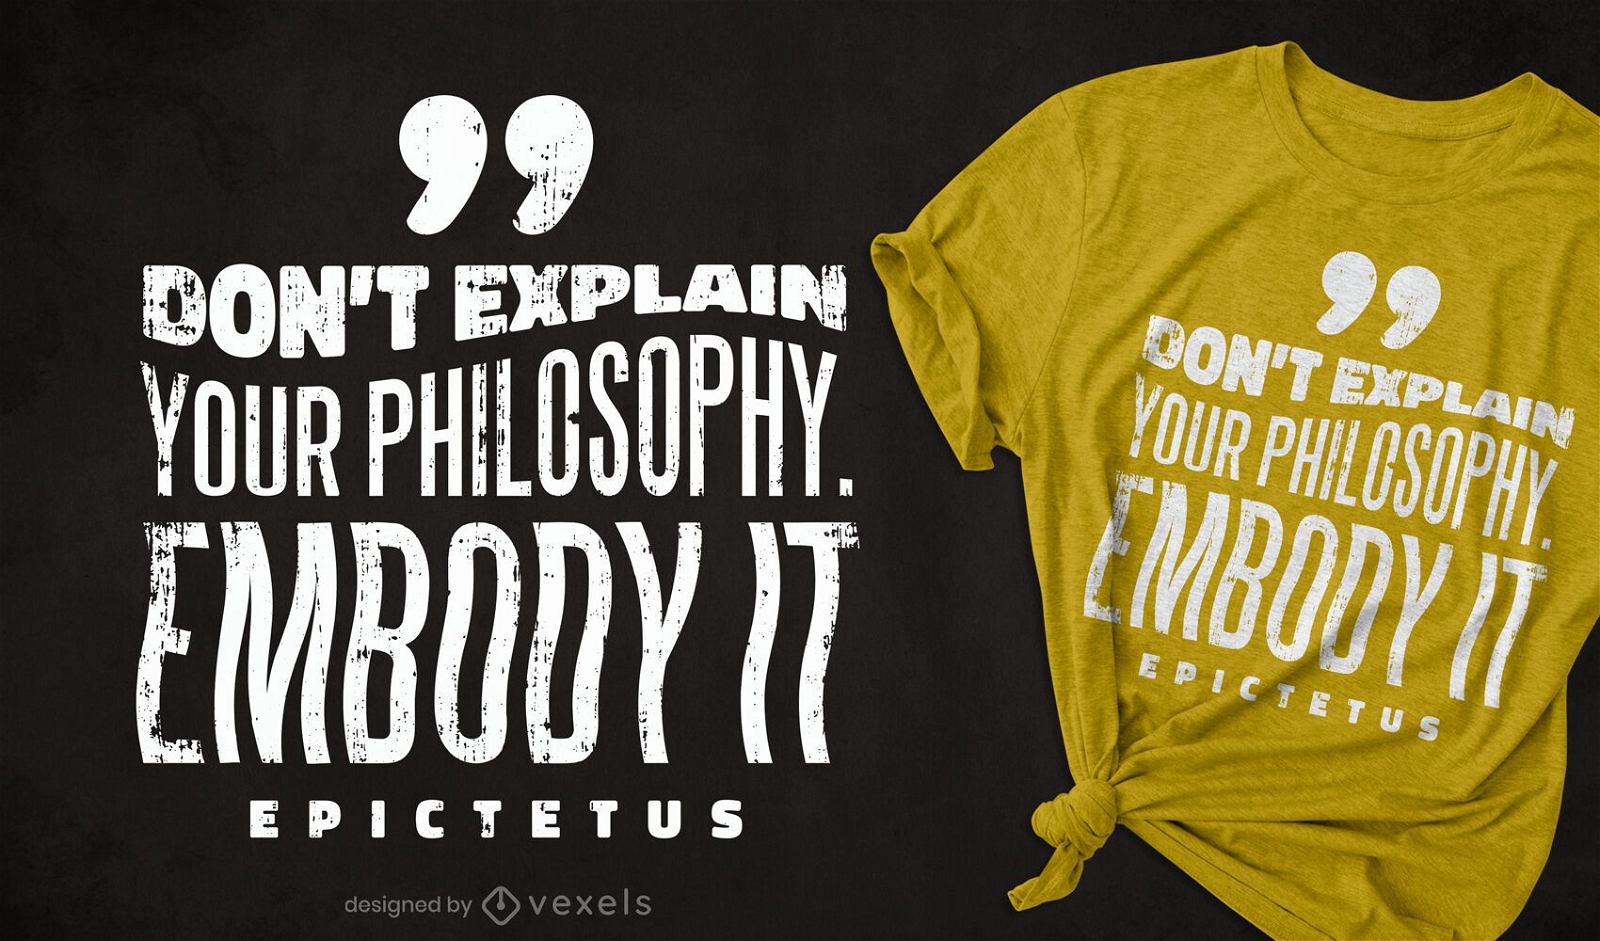 Embody your philosophy t-shirt design